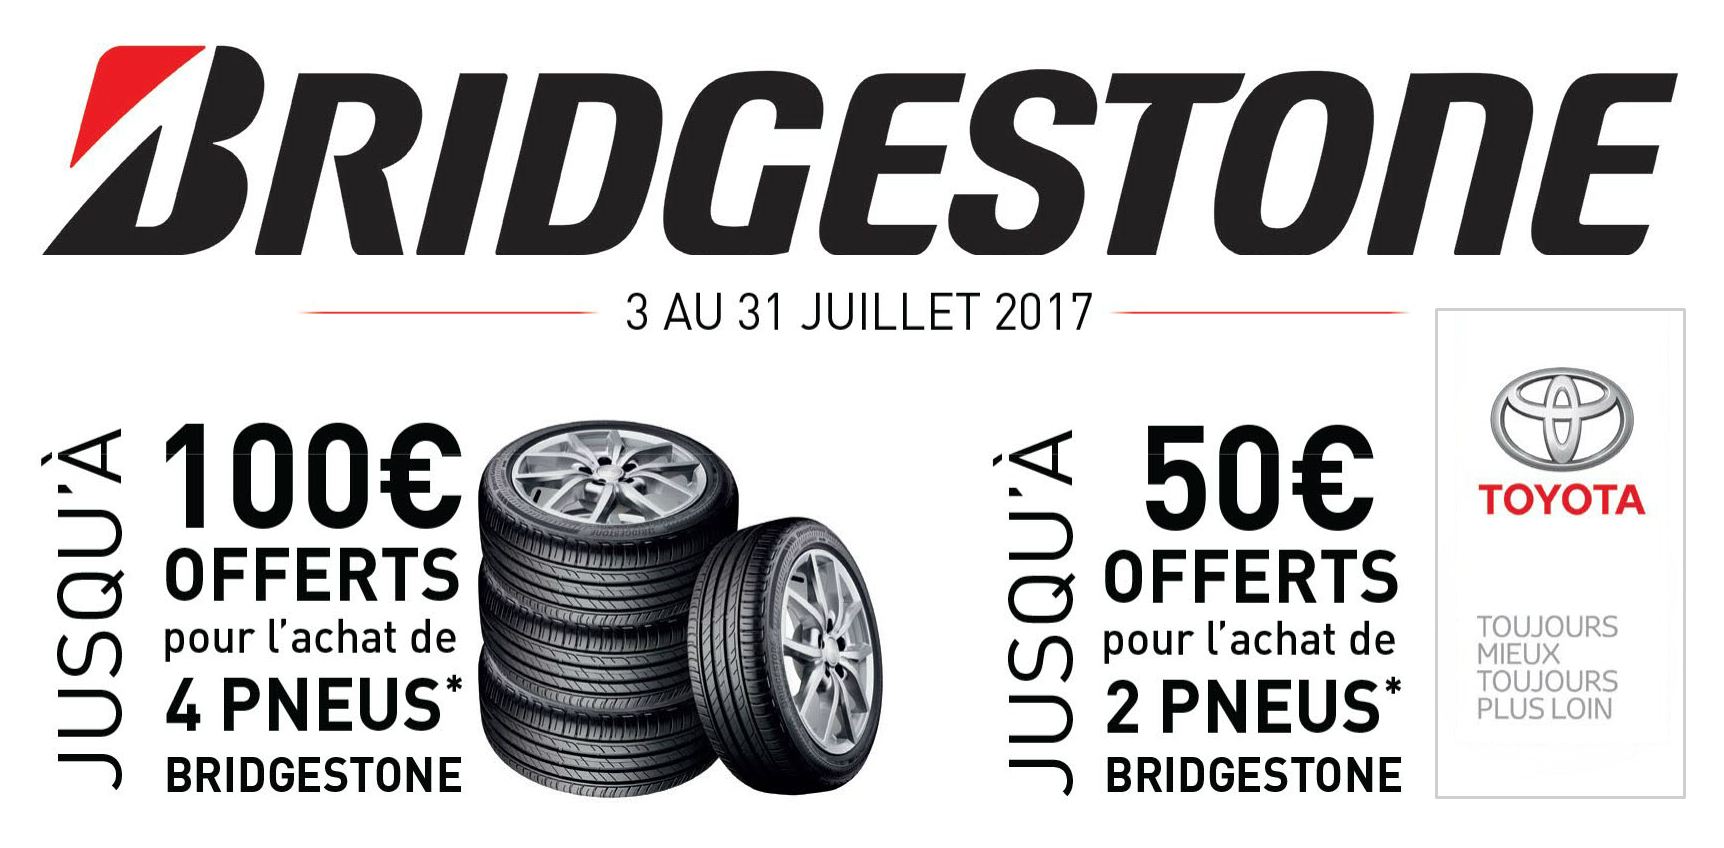 Offre pneu Bridgestone Toyota Albi